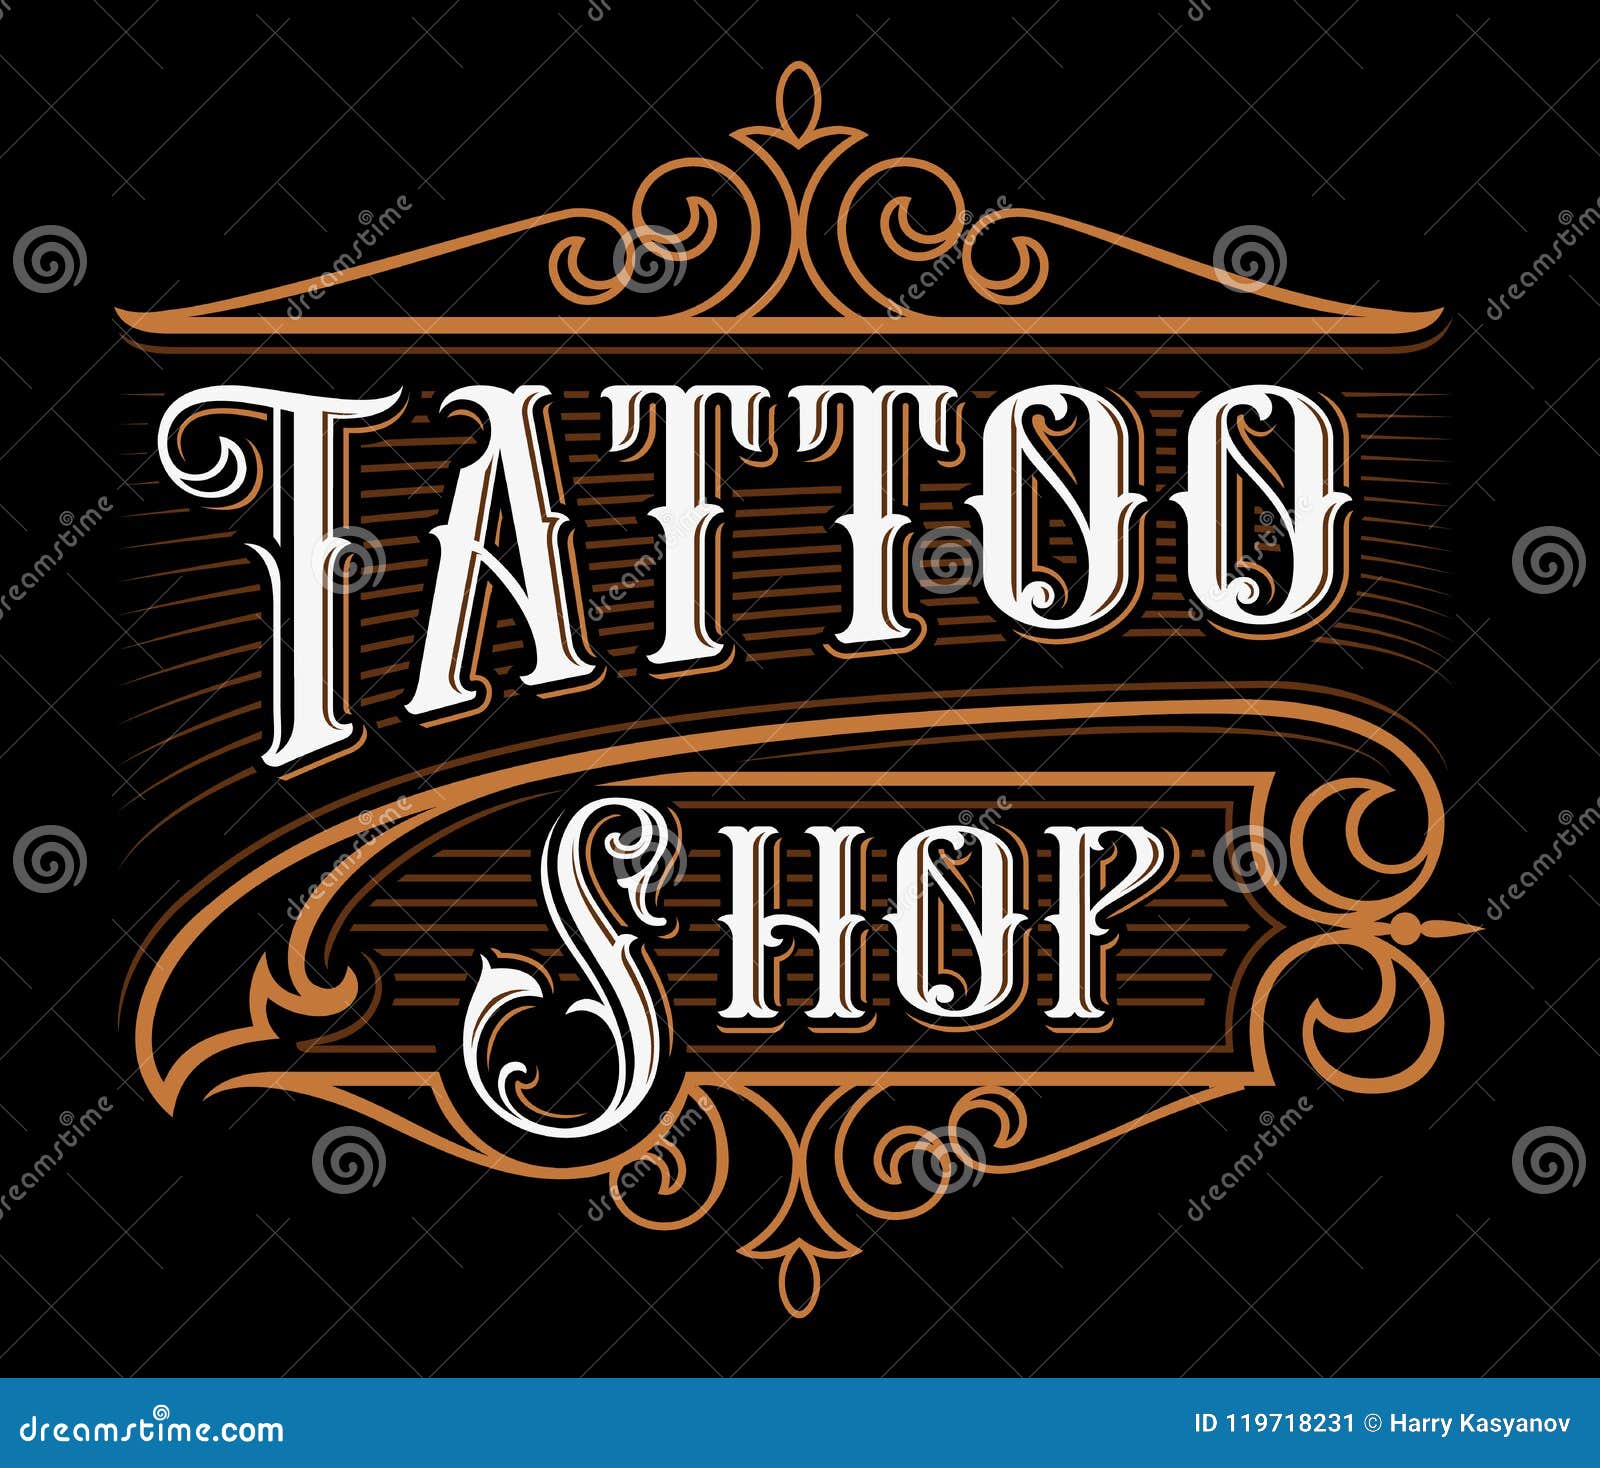 Tattoo Shop Logo Designs